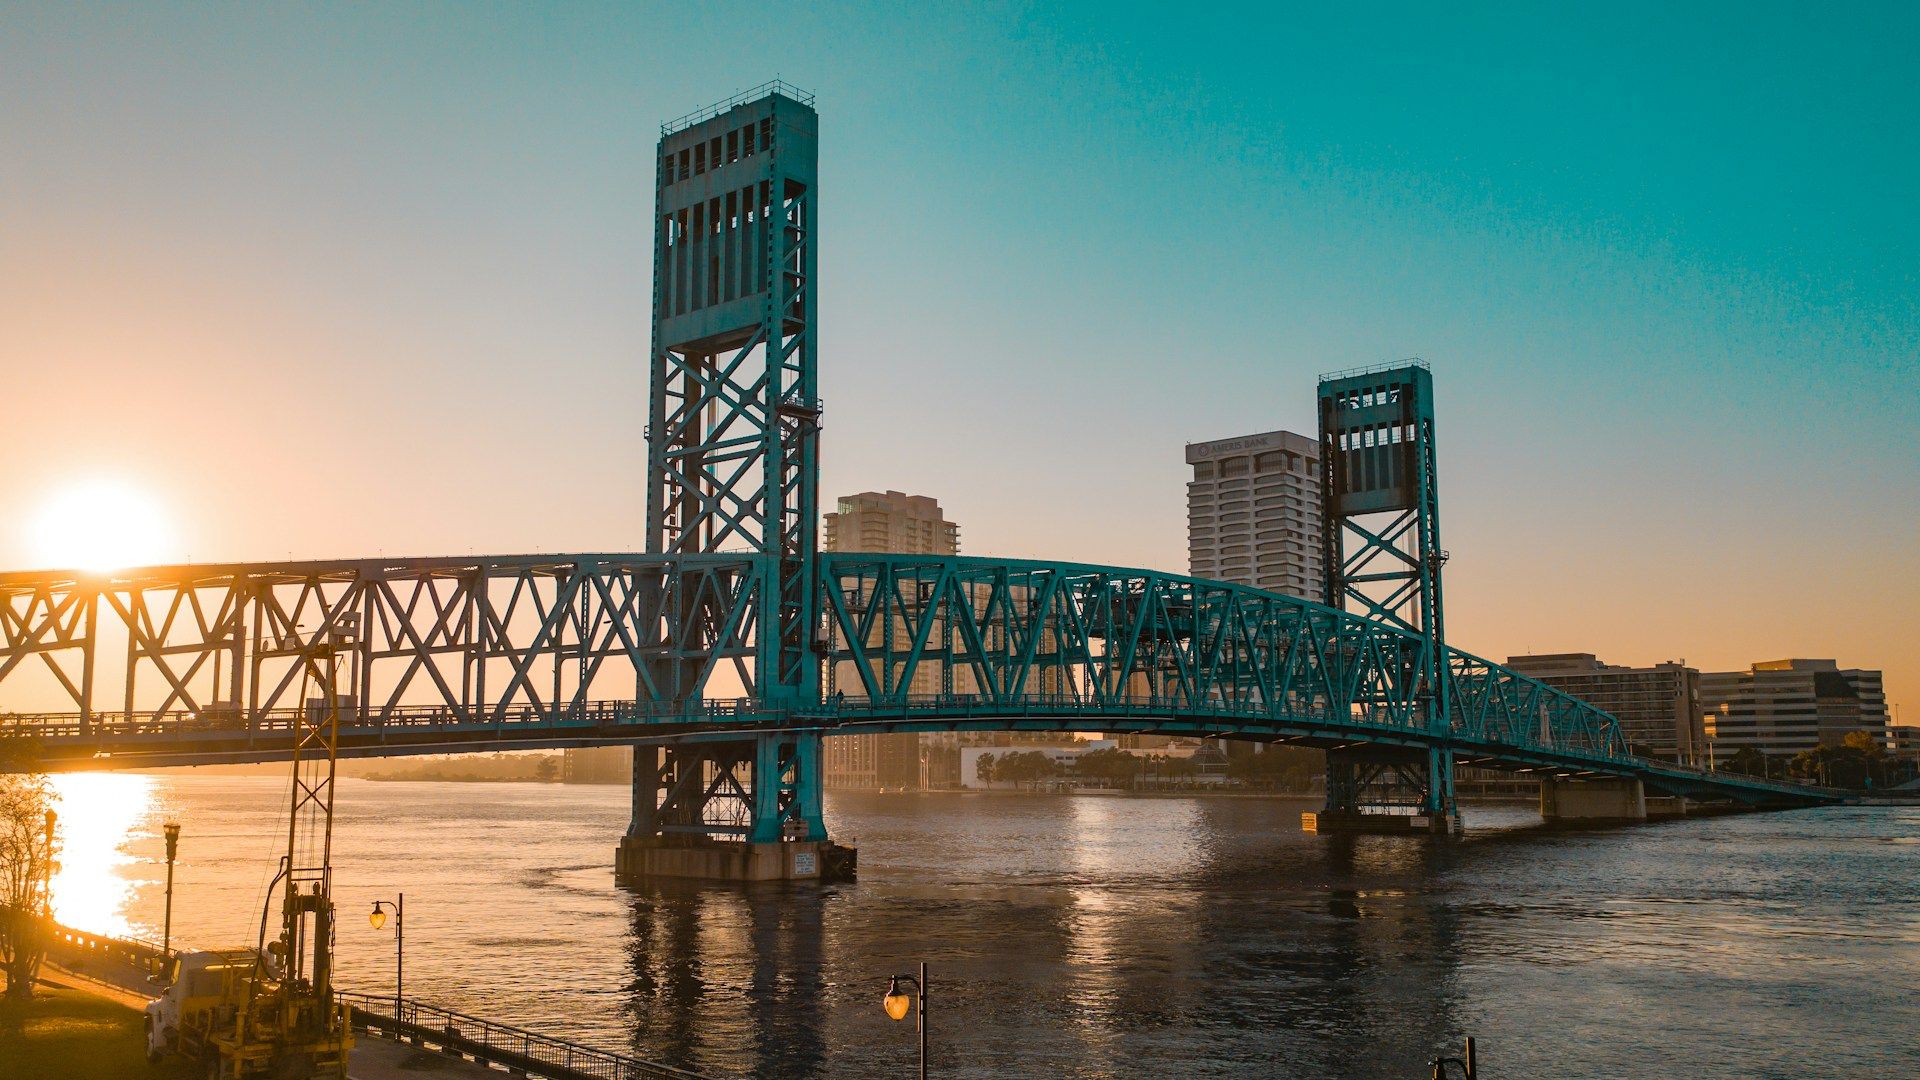 The Main Street Bridge in downtown Jacksonville